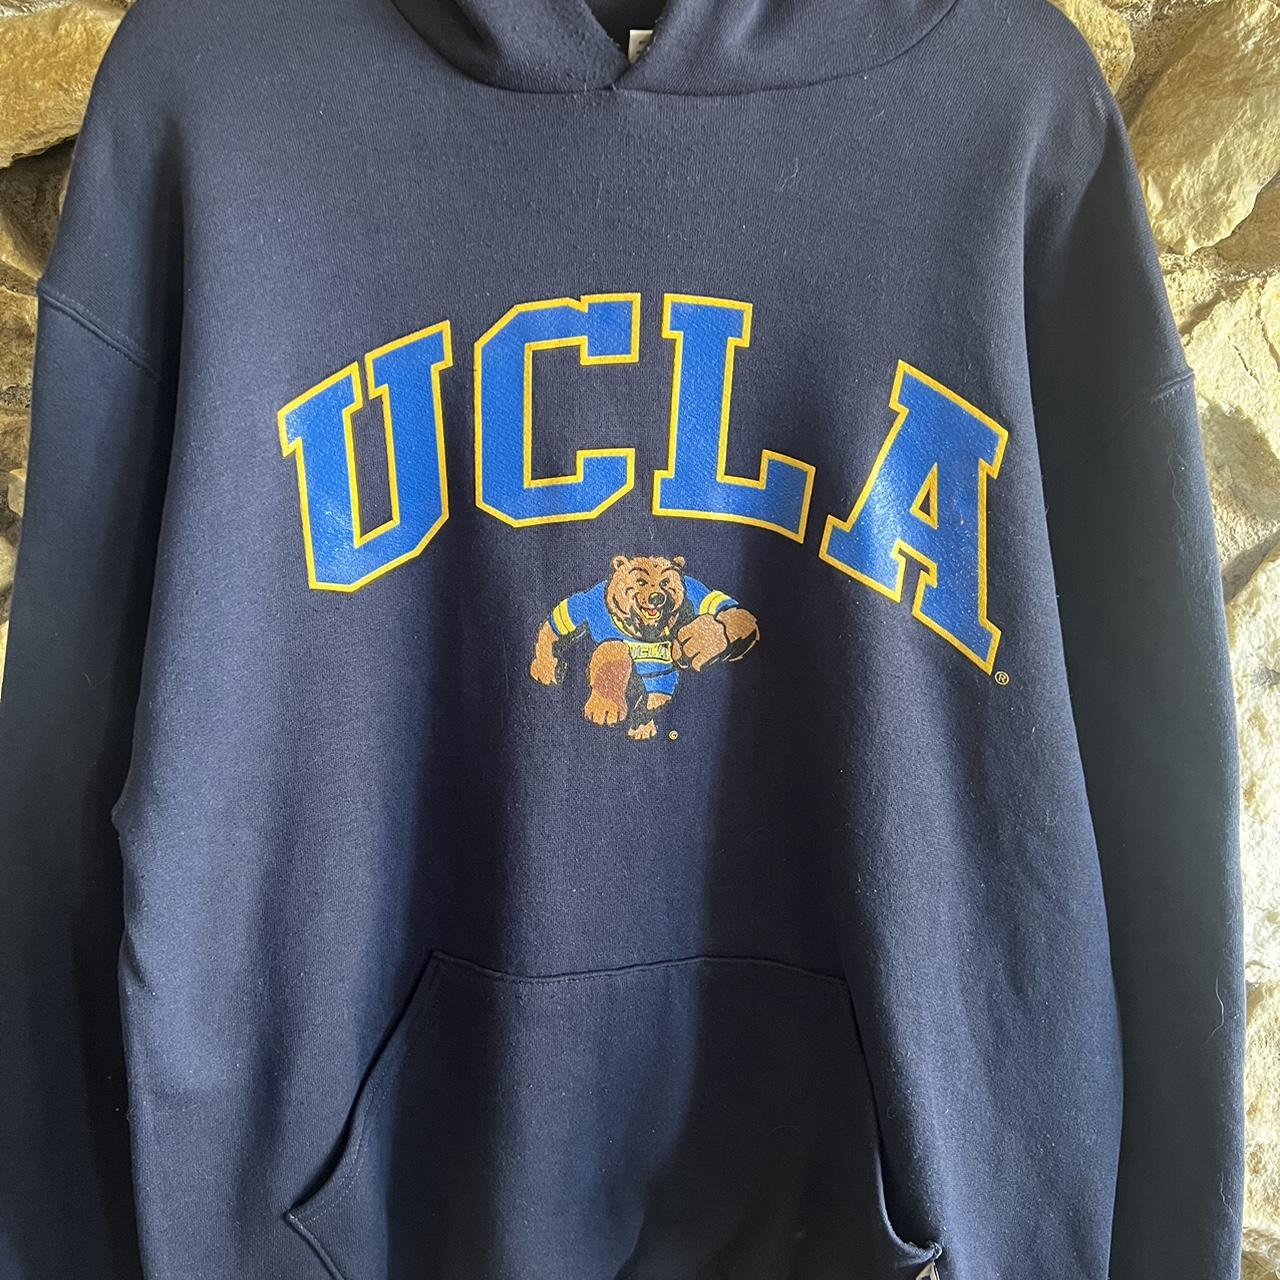 Vintage UCLA sweatshirt Size XL or L (23.5” x... - Depop